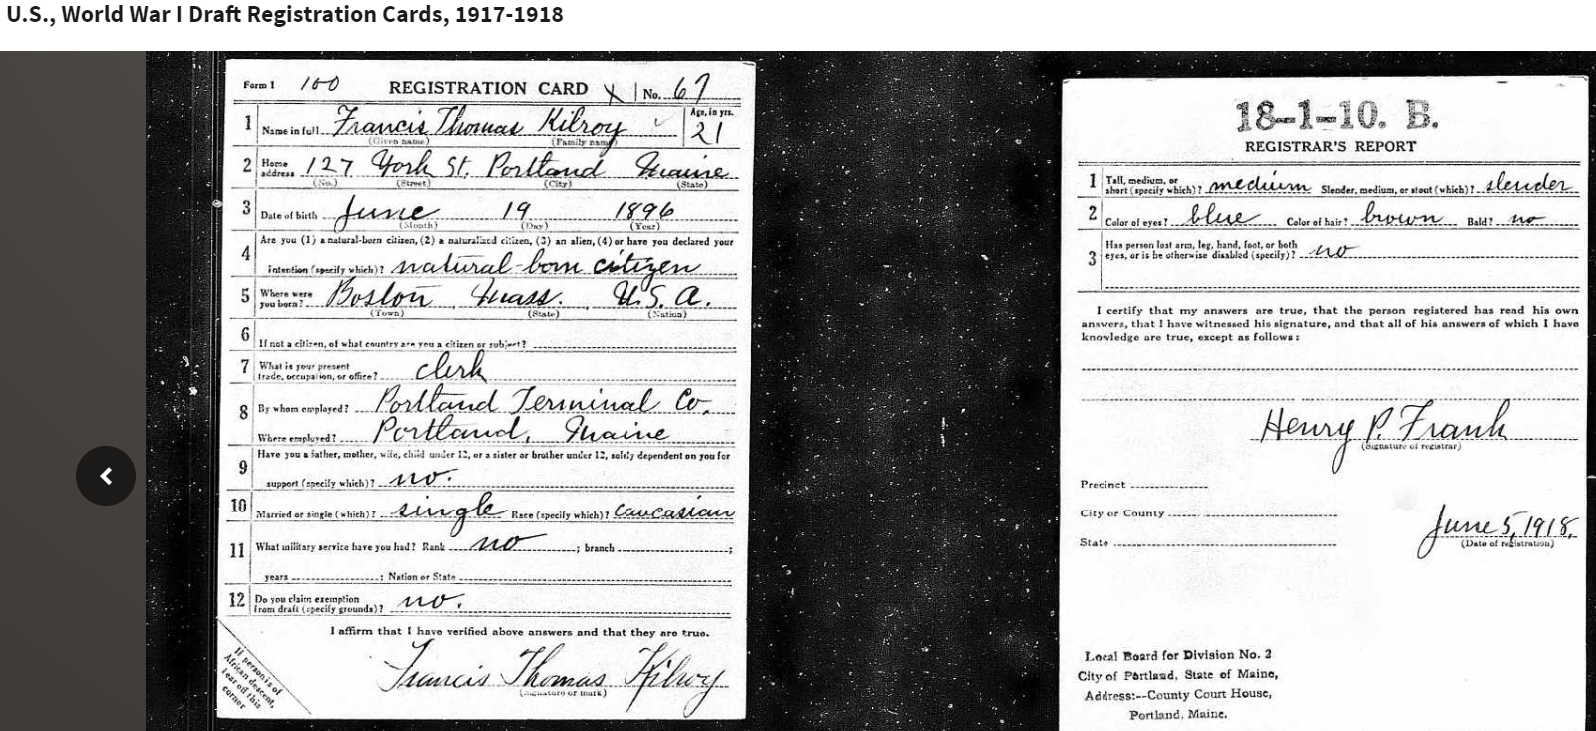 Francis Thomas Kilroy--U.S., World War I Draft Registration Cards, 1917-1918